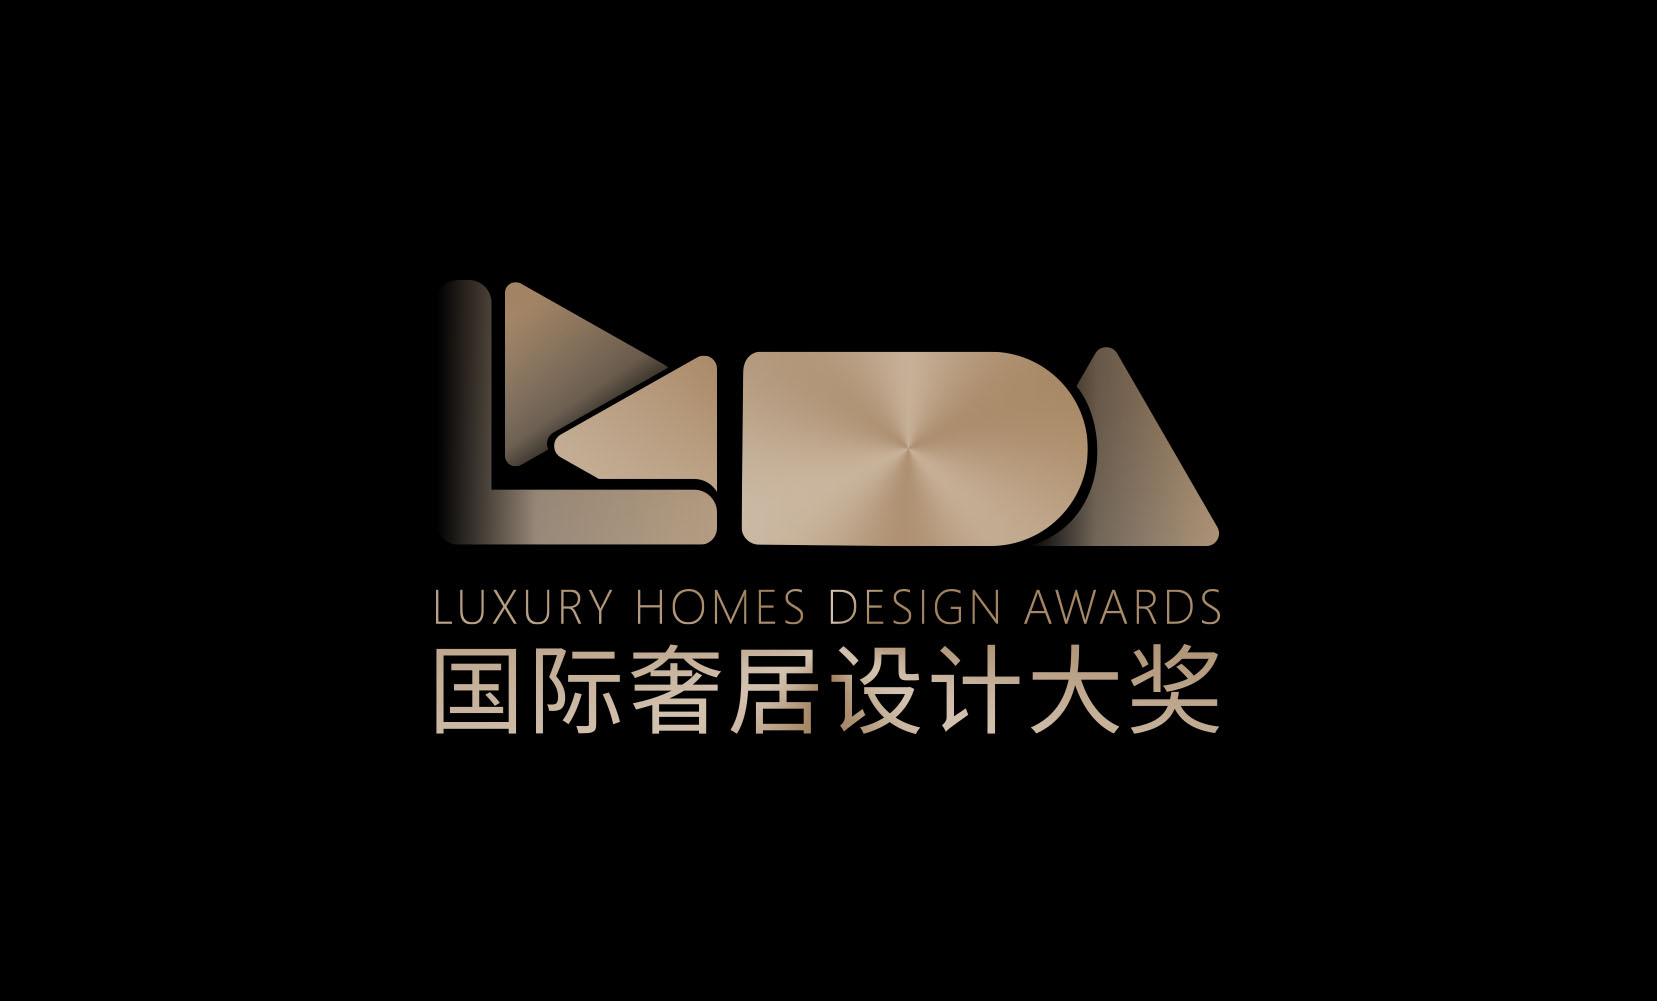 2022 LUXURY HOMES DESIGN AWARDS – Best of the best award